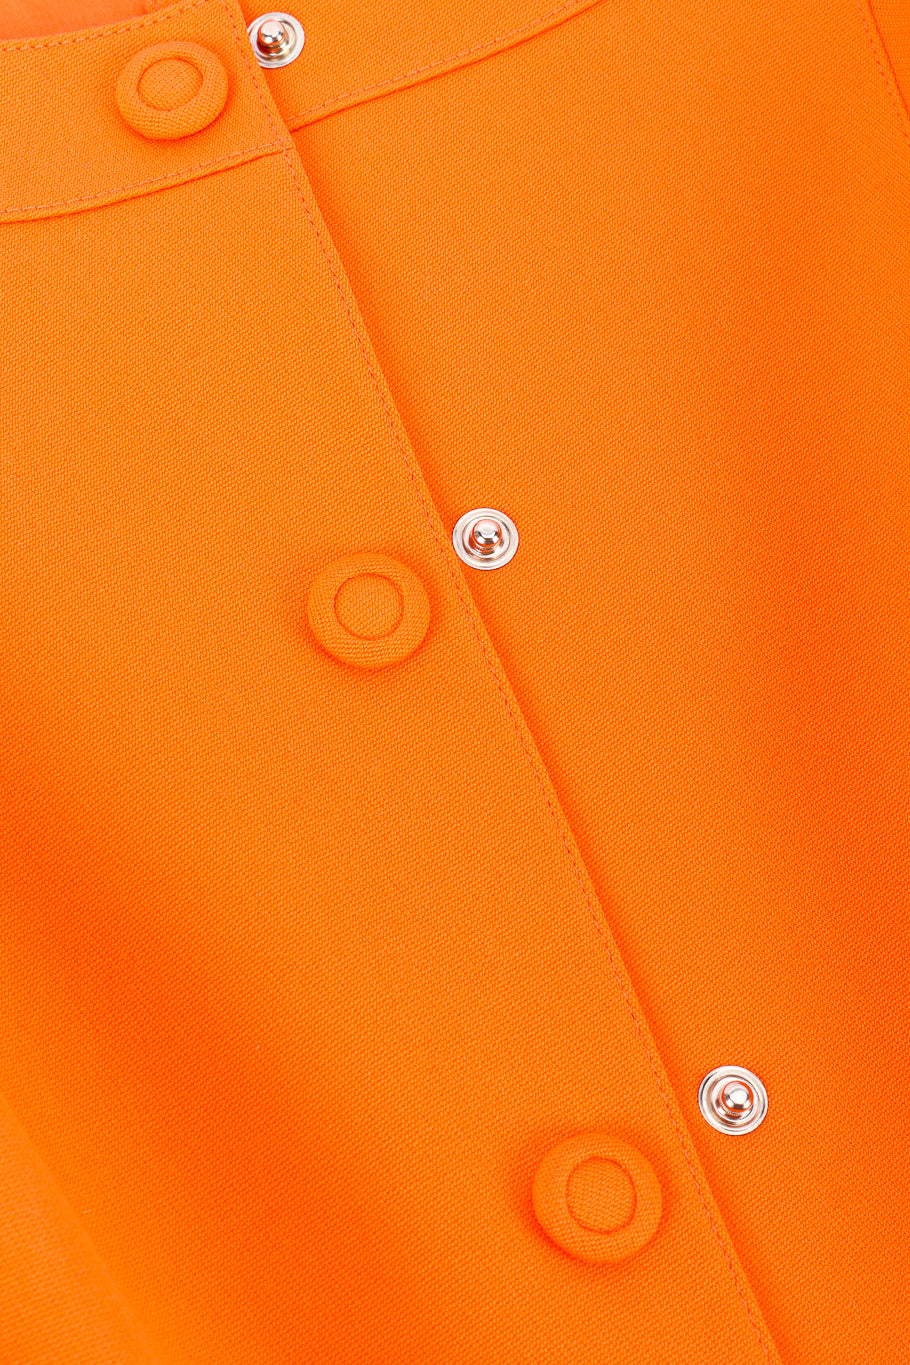 Thierry Mugler Off Shoulder Bubble Jacket front button closure closeup @Recessla